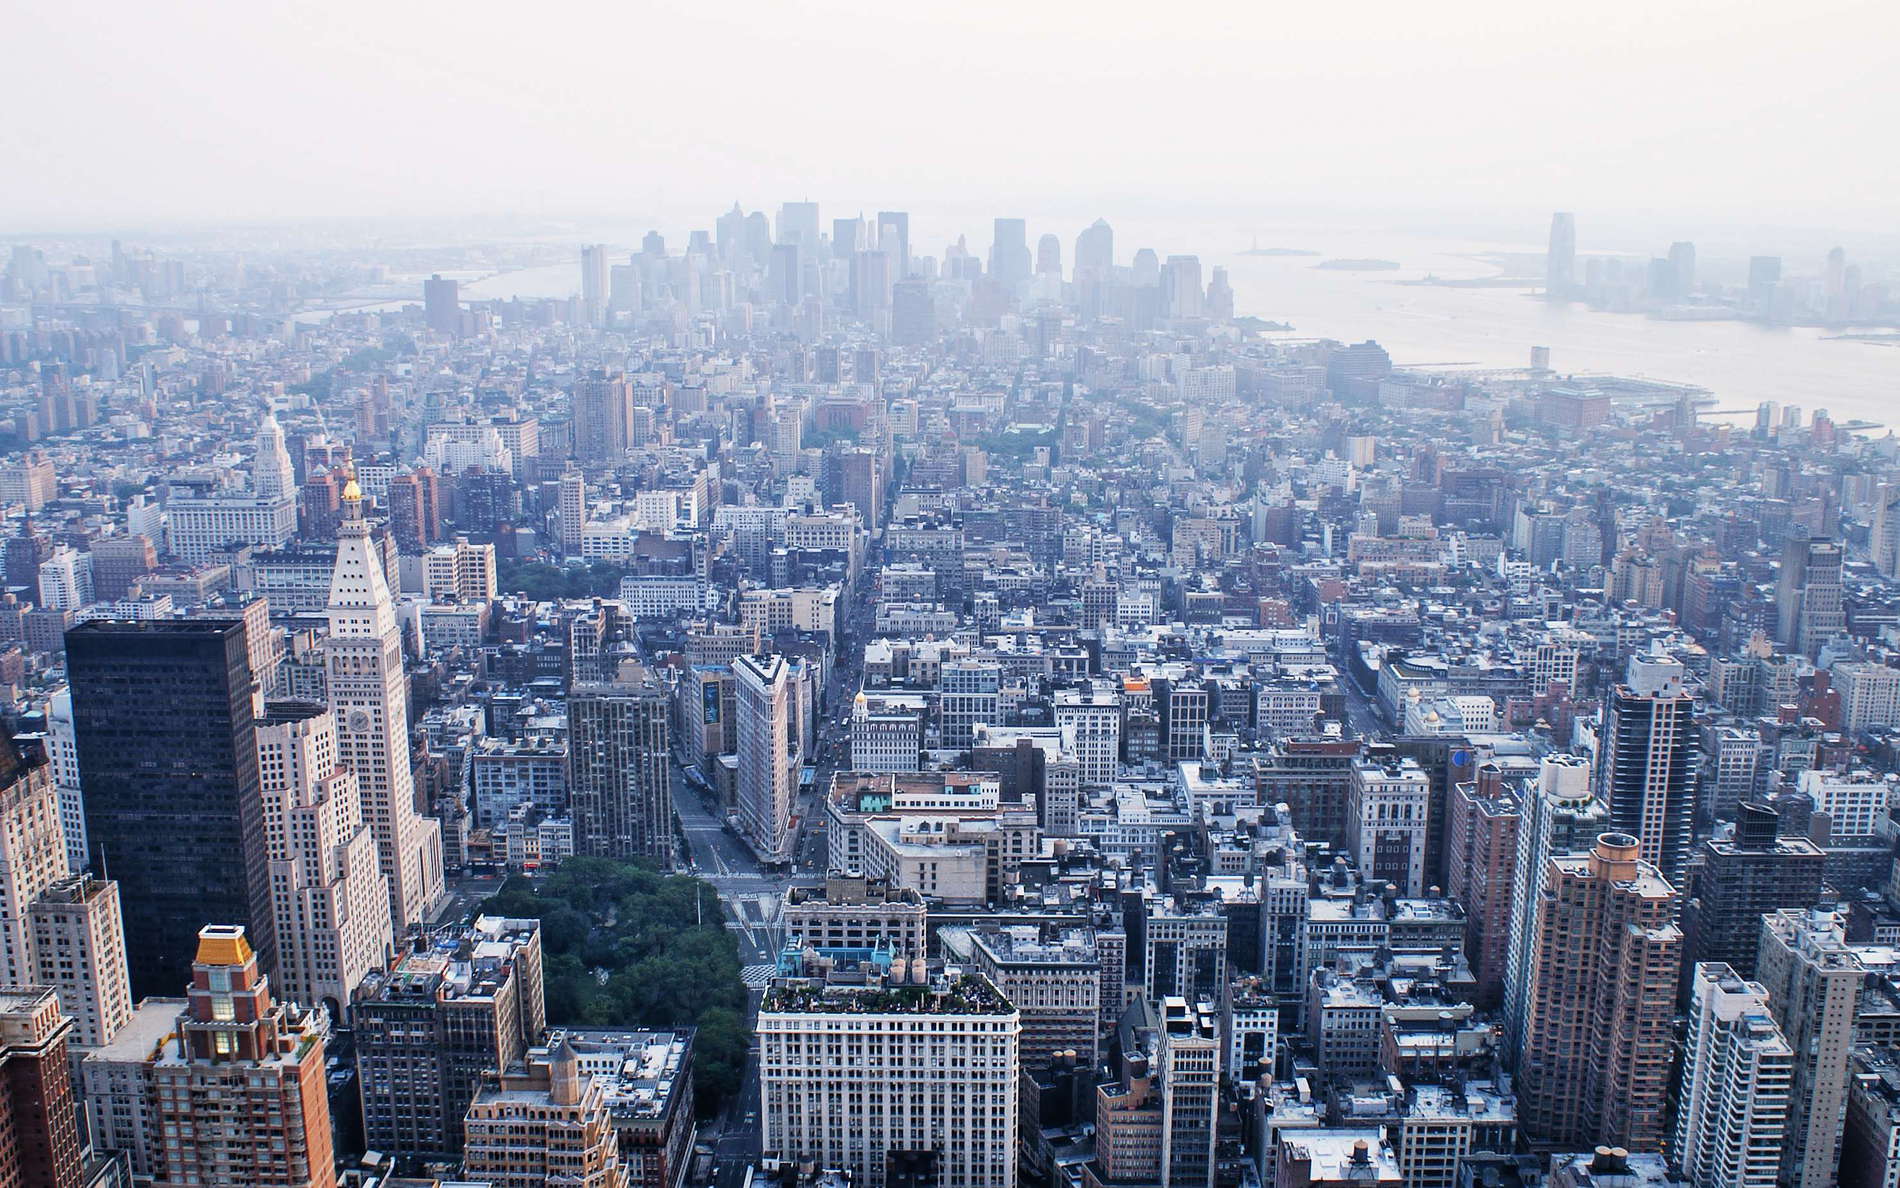 Midtown and Lower Manhattan